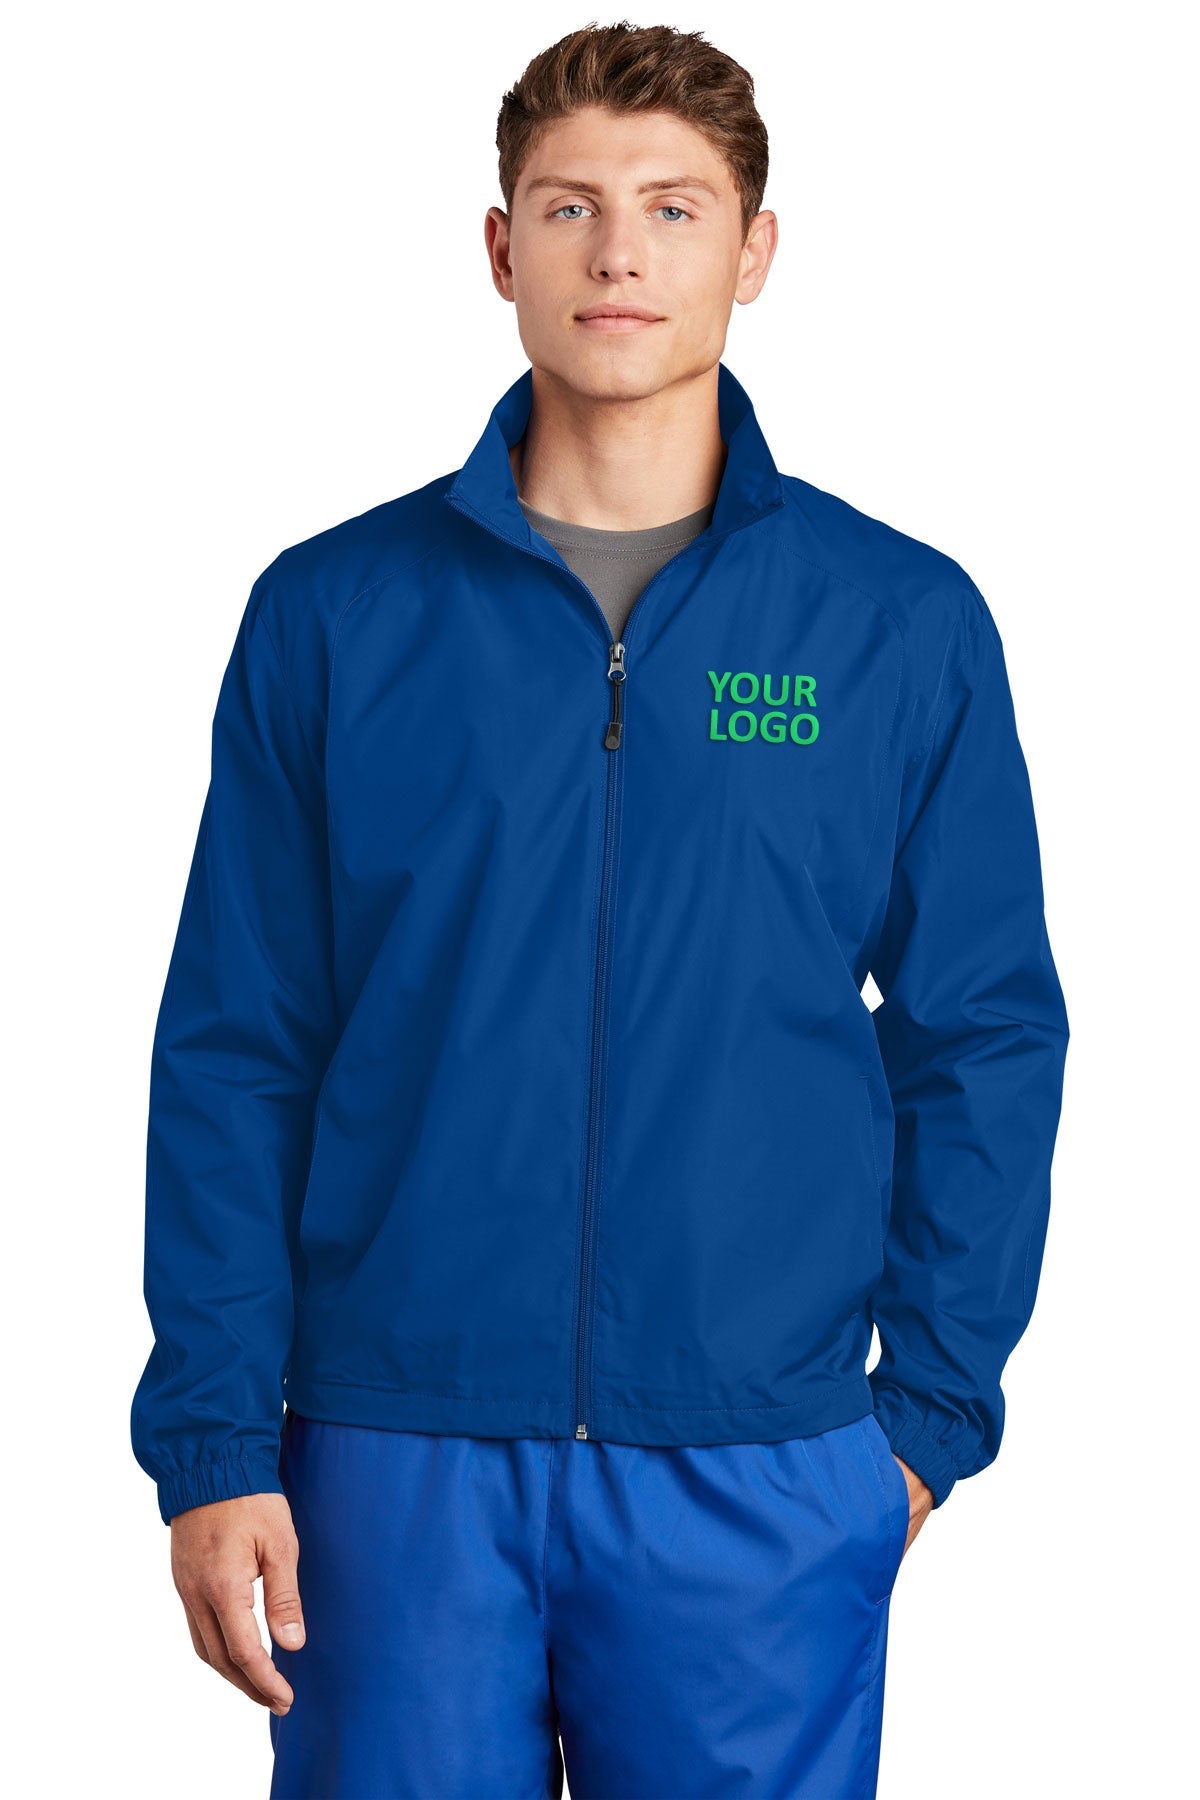 Sport-Tek True Royal JST70 company embroidered jackets